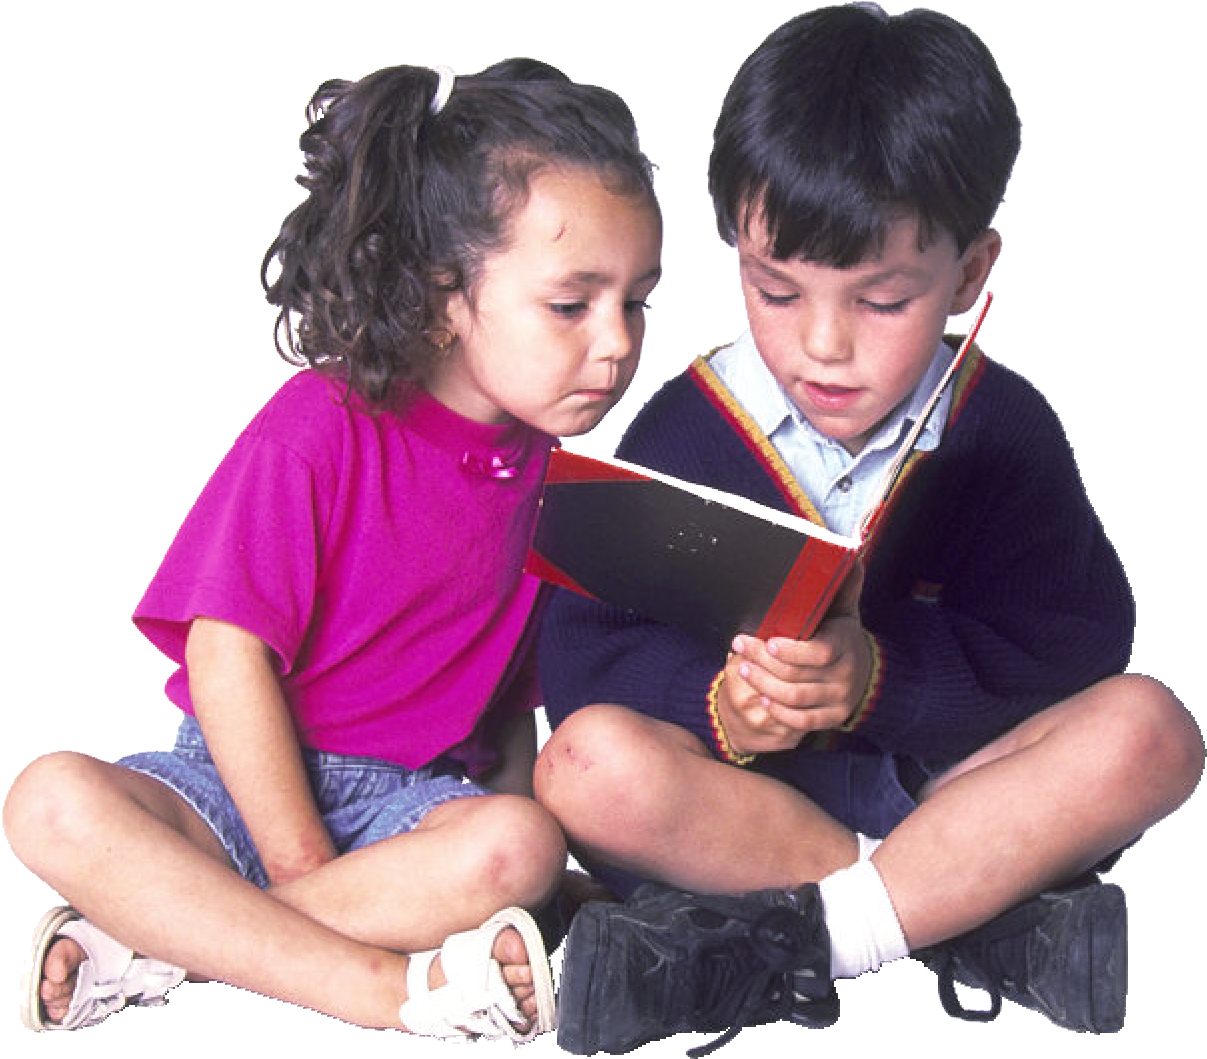 Children Reading Book Together PNG